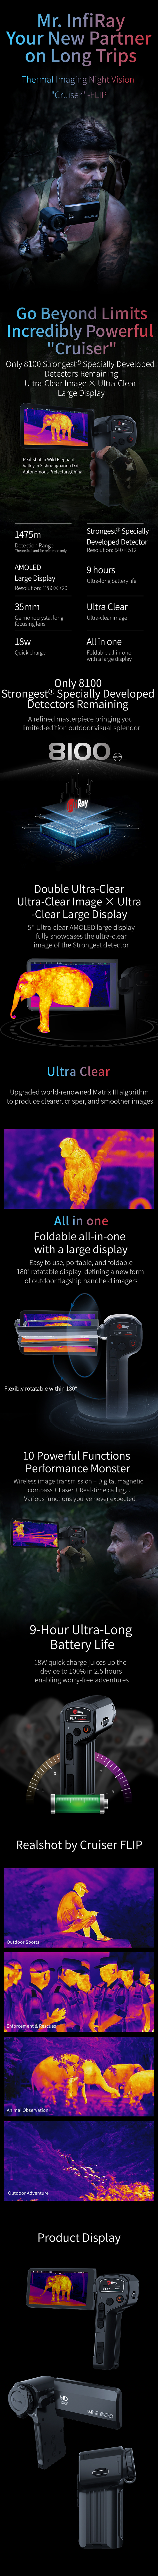 Flip - flop ph35 Thermal Imager